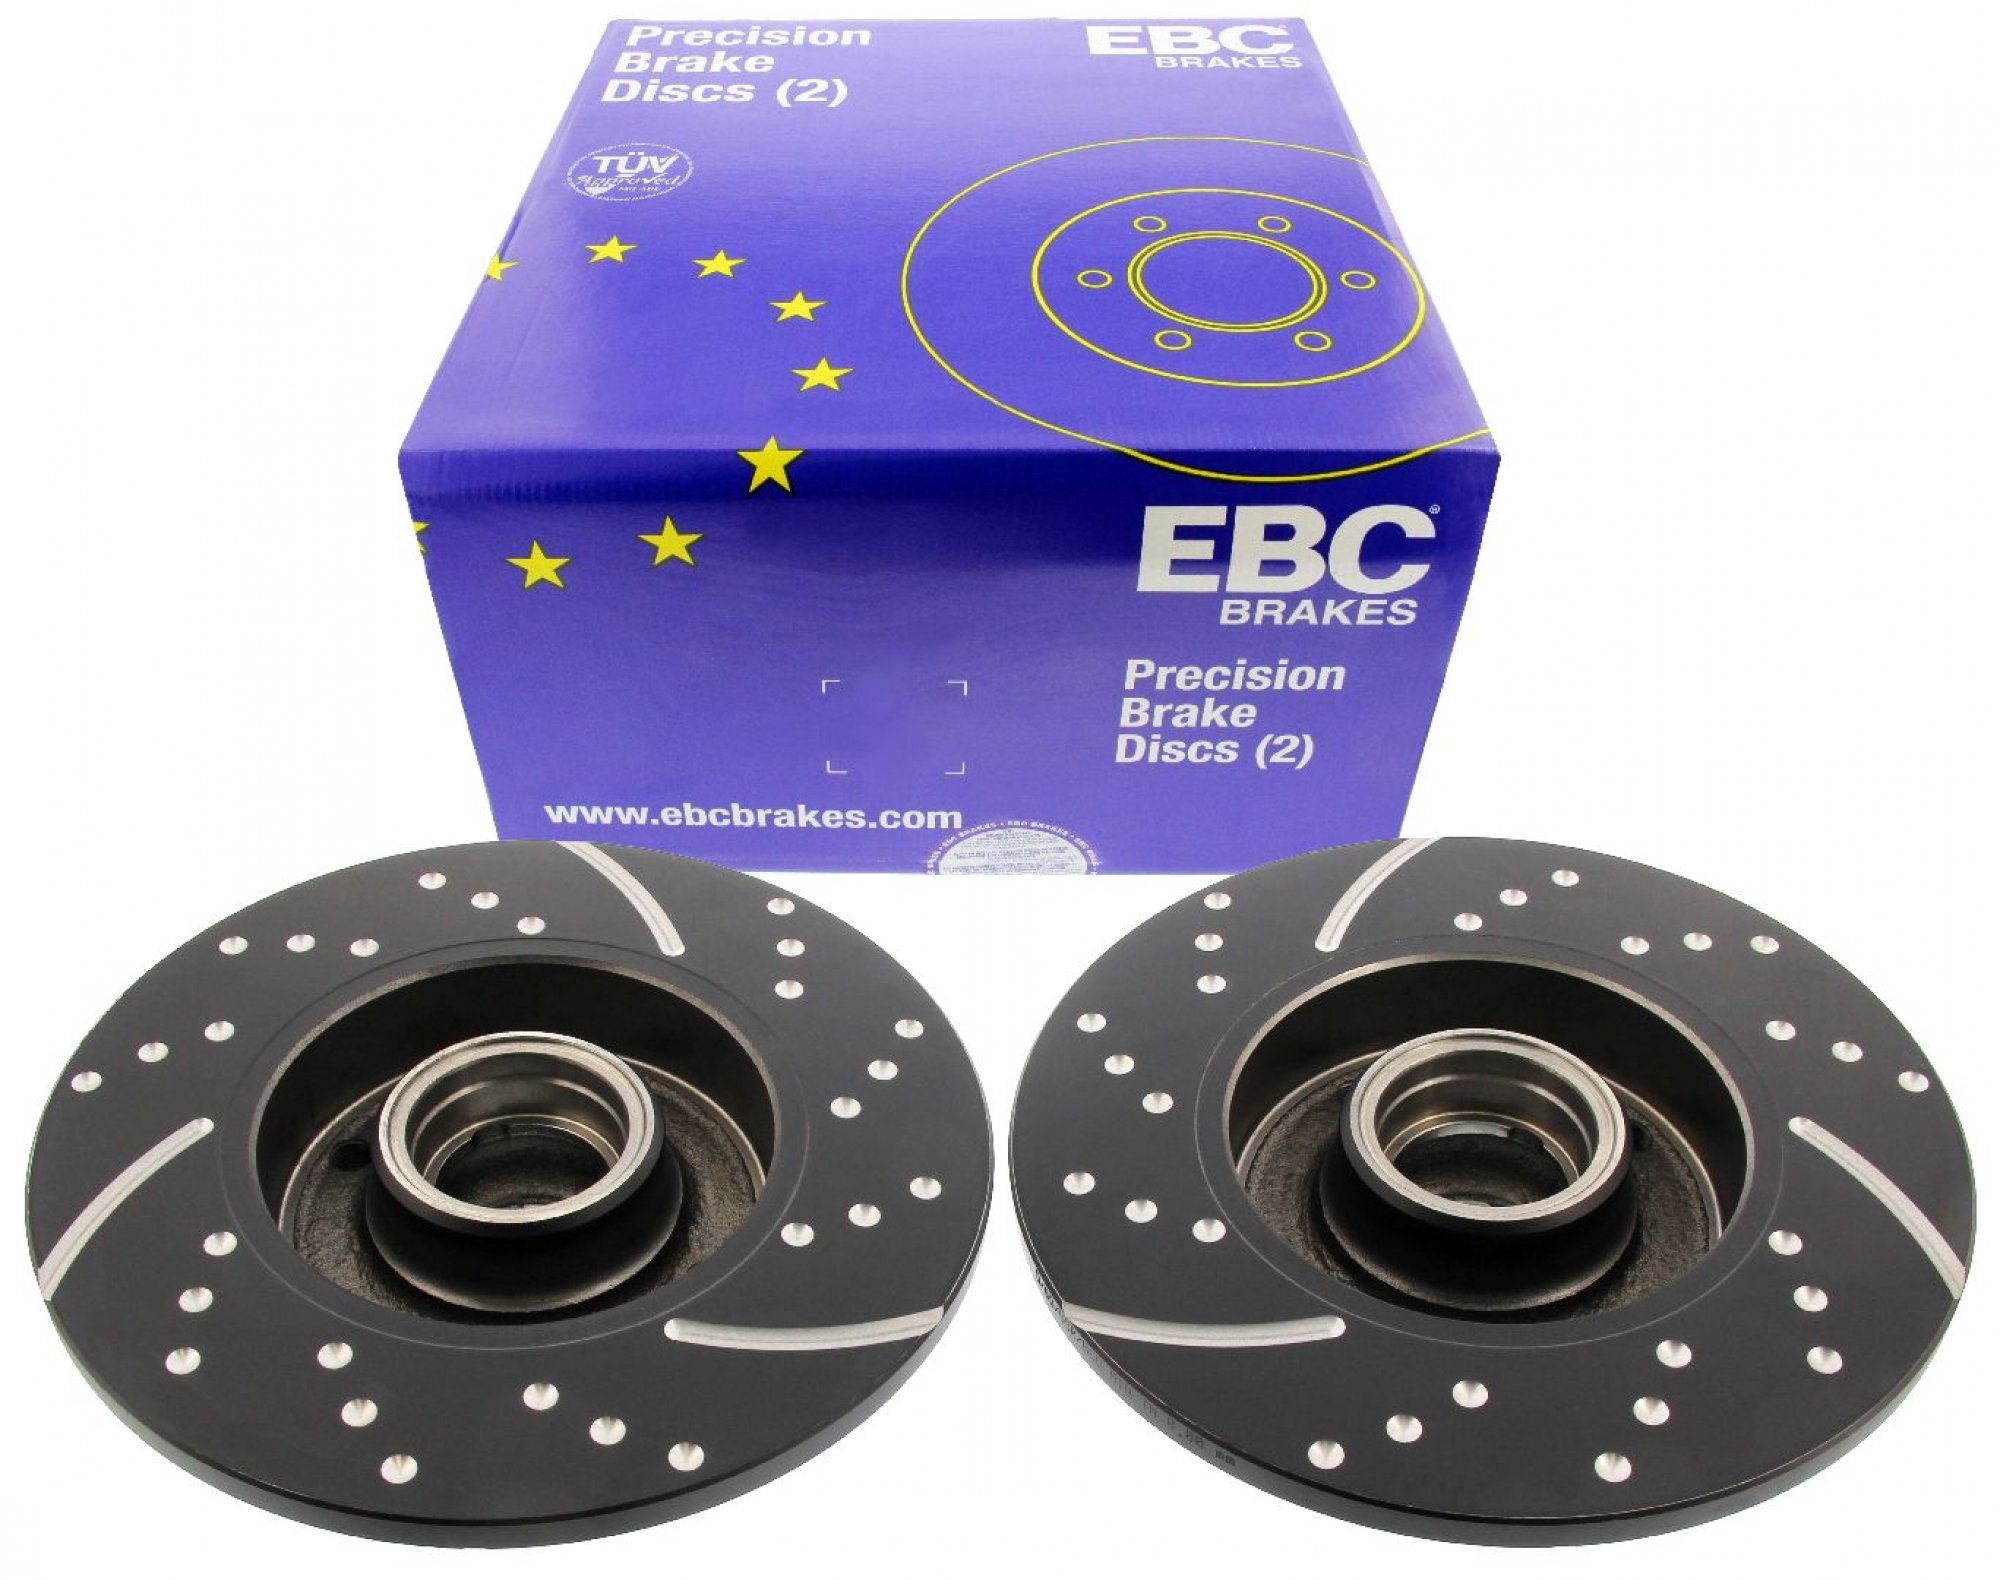 EBC-Bremsscheiben, Turbo Groove Disc Black (2-teilig), HA, VW Golf 2/3, Corrado, G60-Bremse 226 mm